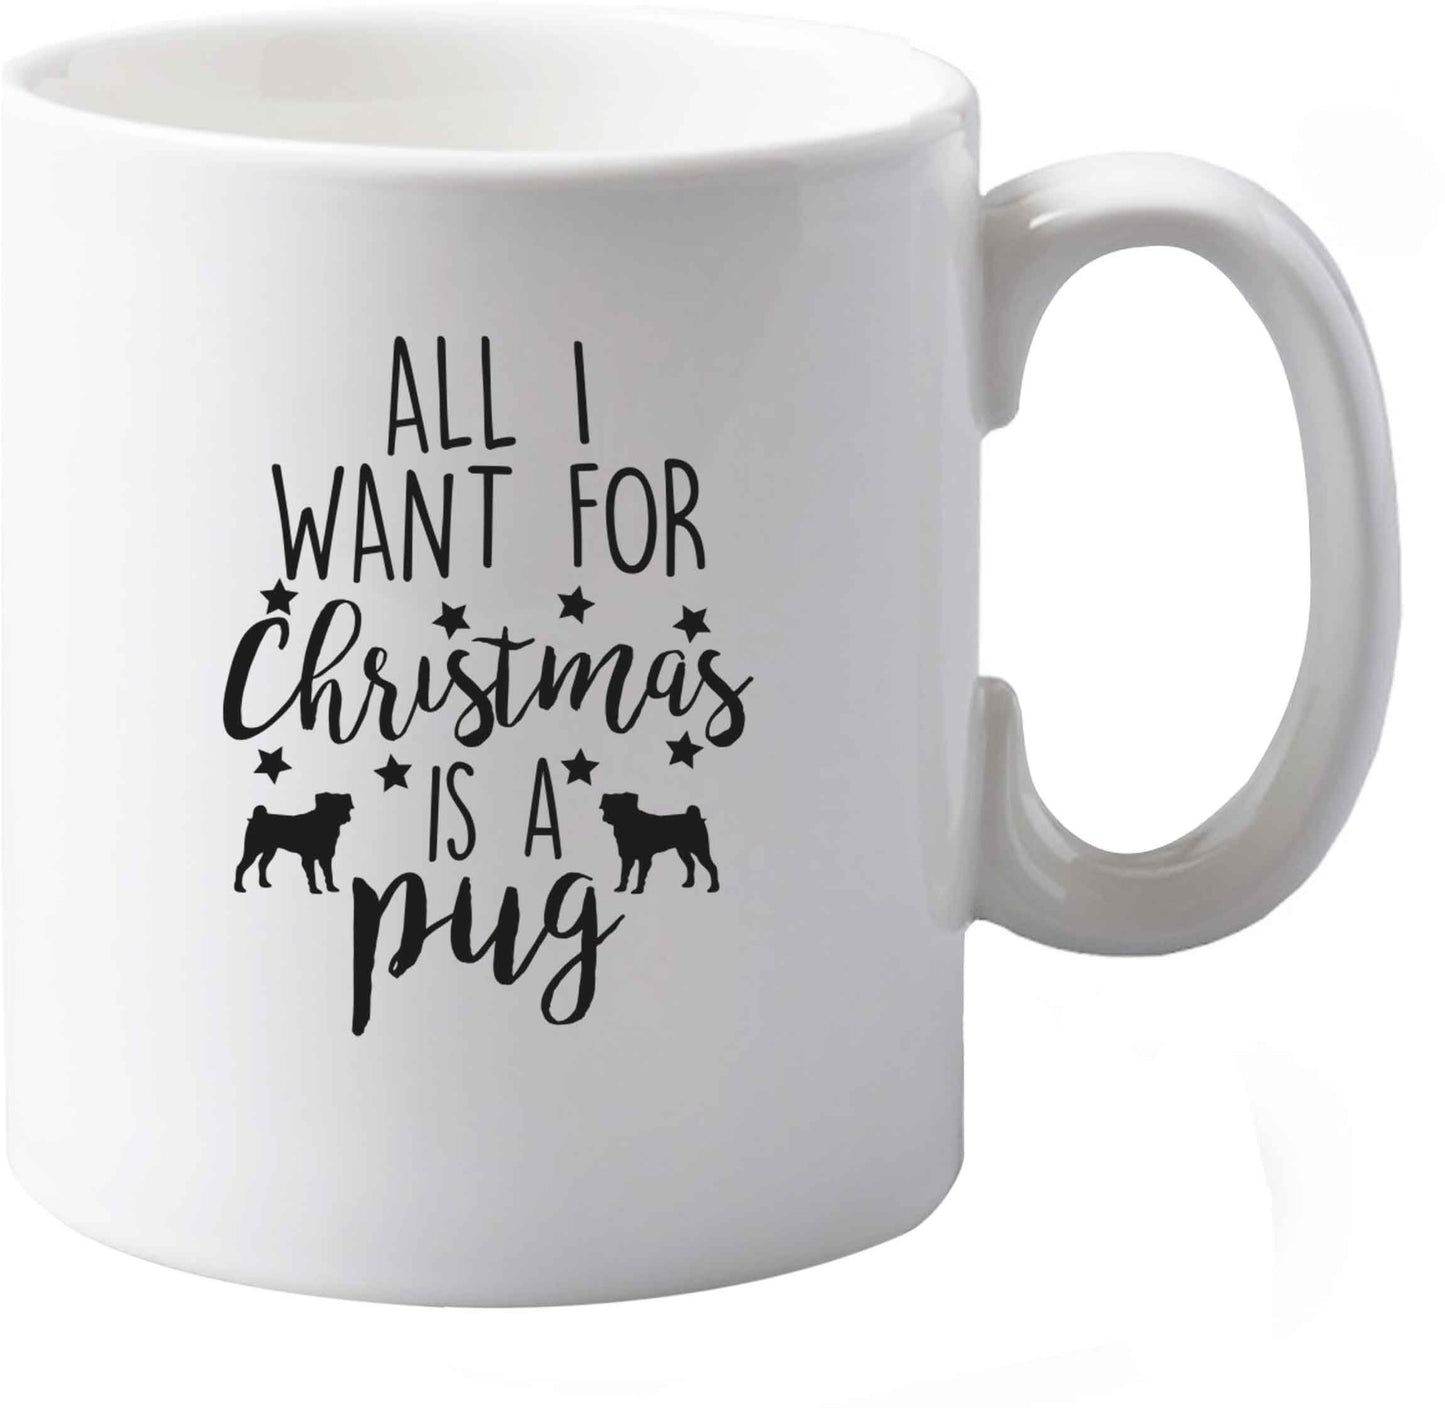 10 oz All I want for Christmas is a pug ceramic mug both sides